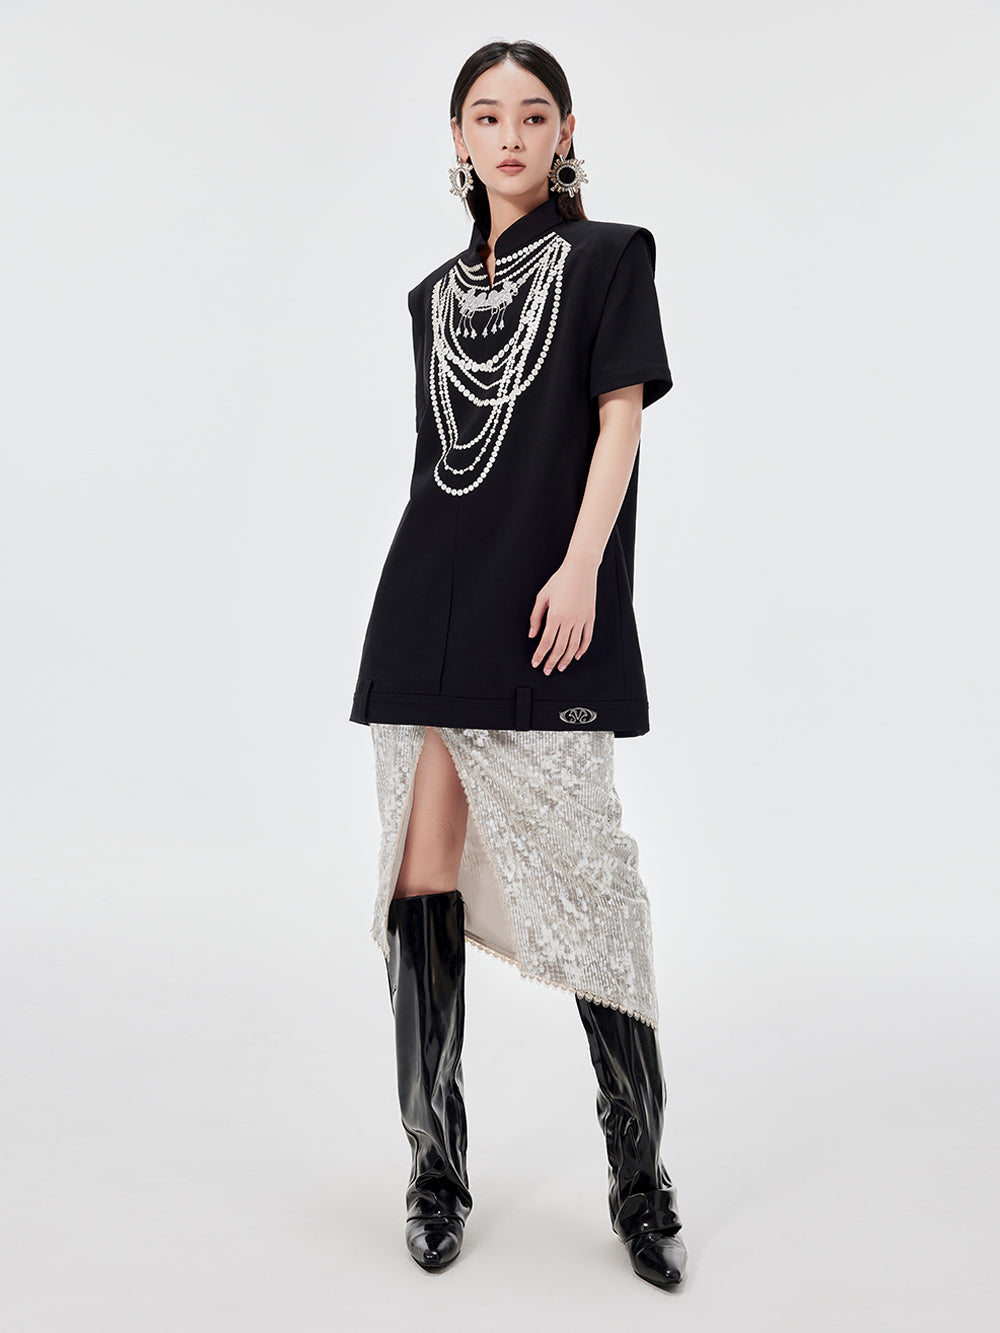 MUKZIN Chinese Style Stand Collar Loose Fashion Rivet Dress